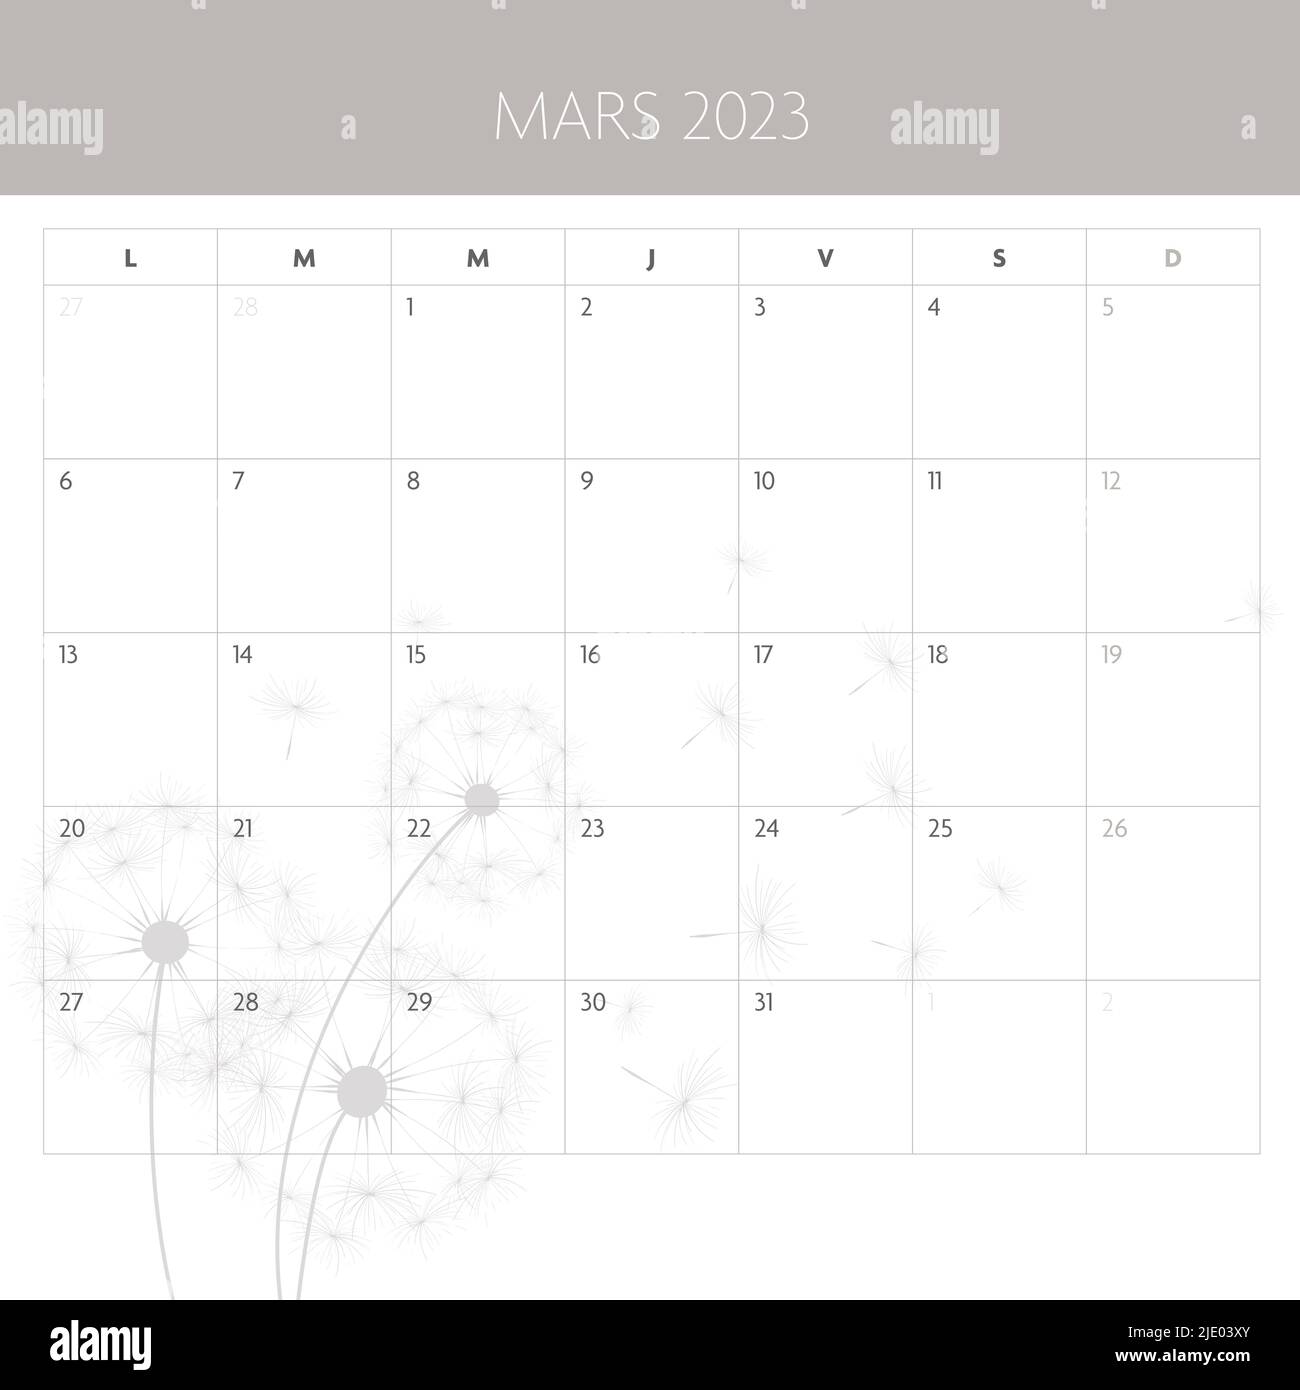 Printable Calendar Fotos Und Bildmaterial In Hoher Auflösung Alamy